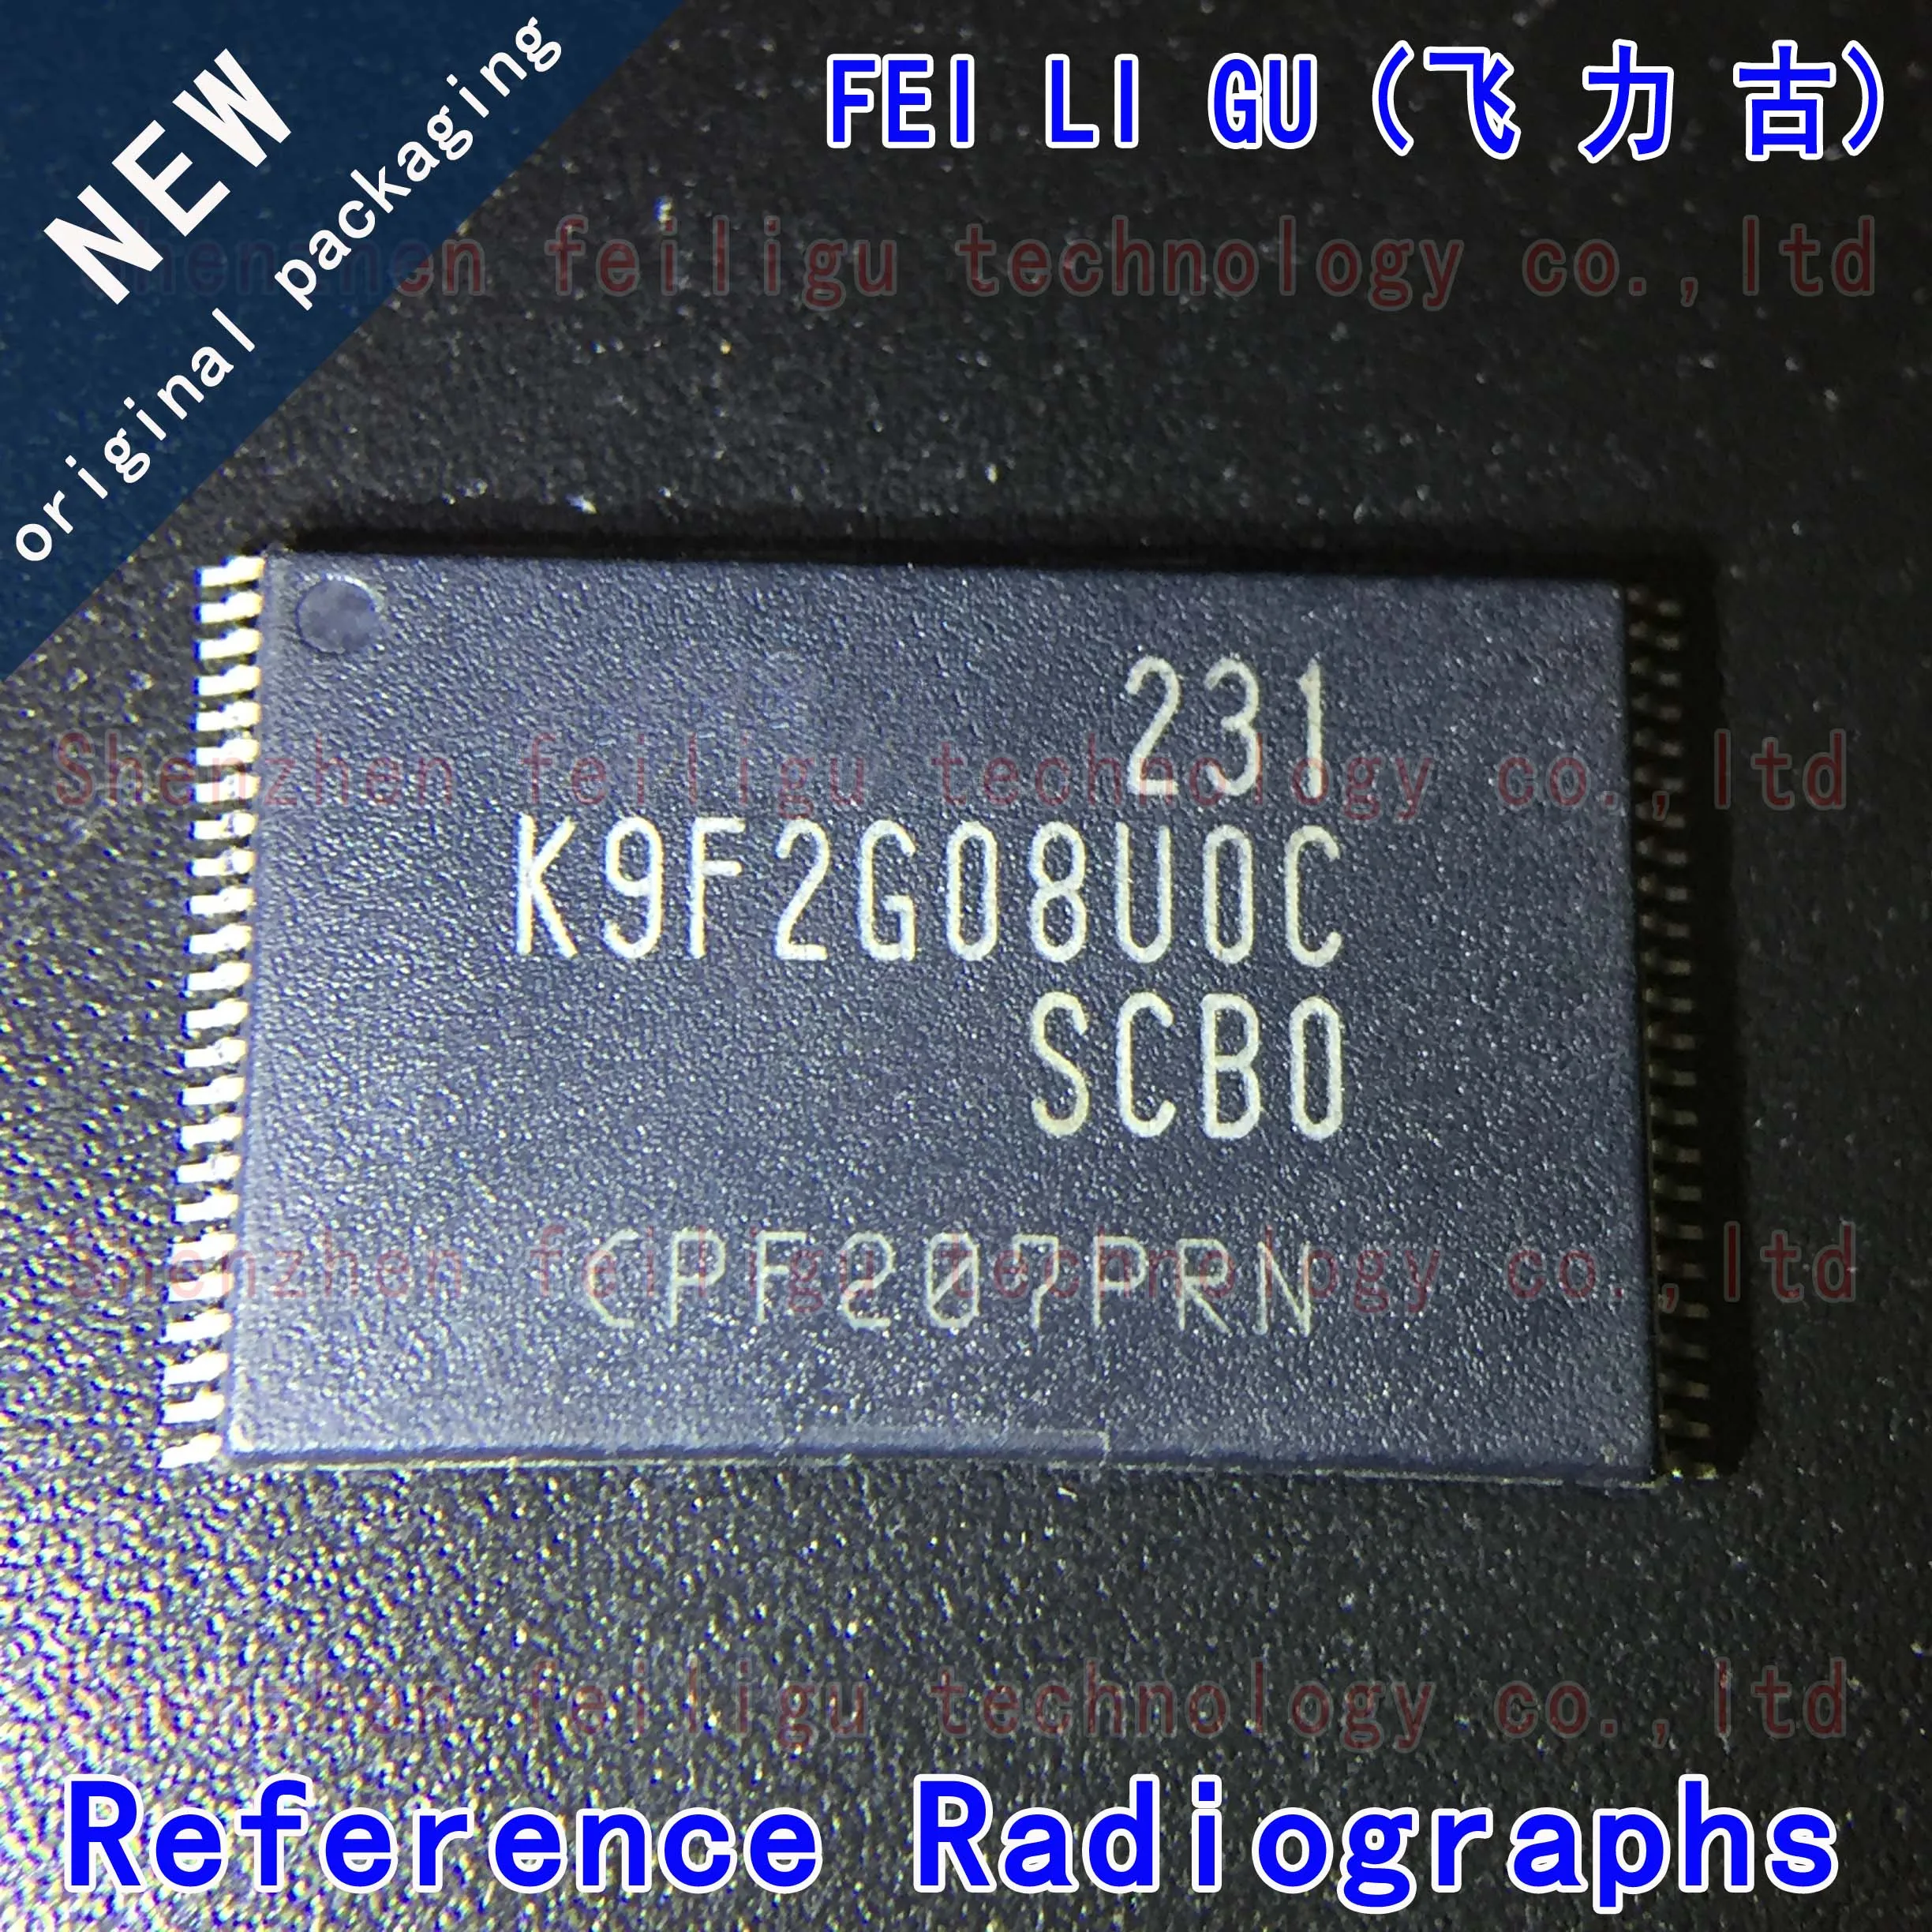 1PCS 100% New original K9F2G08U0C-SCB0 K9F2G08U0C package:TSOP48 memory flash chip new original hy27uf081g2a tpcb tsop48 memory chip